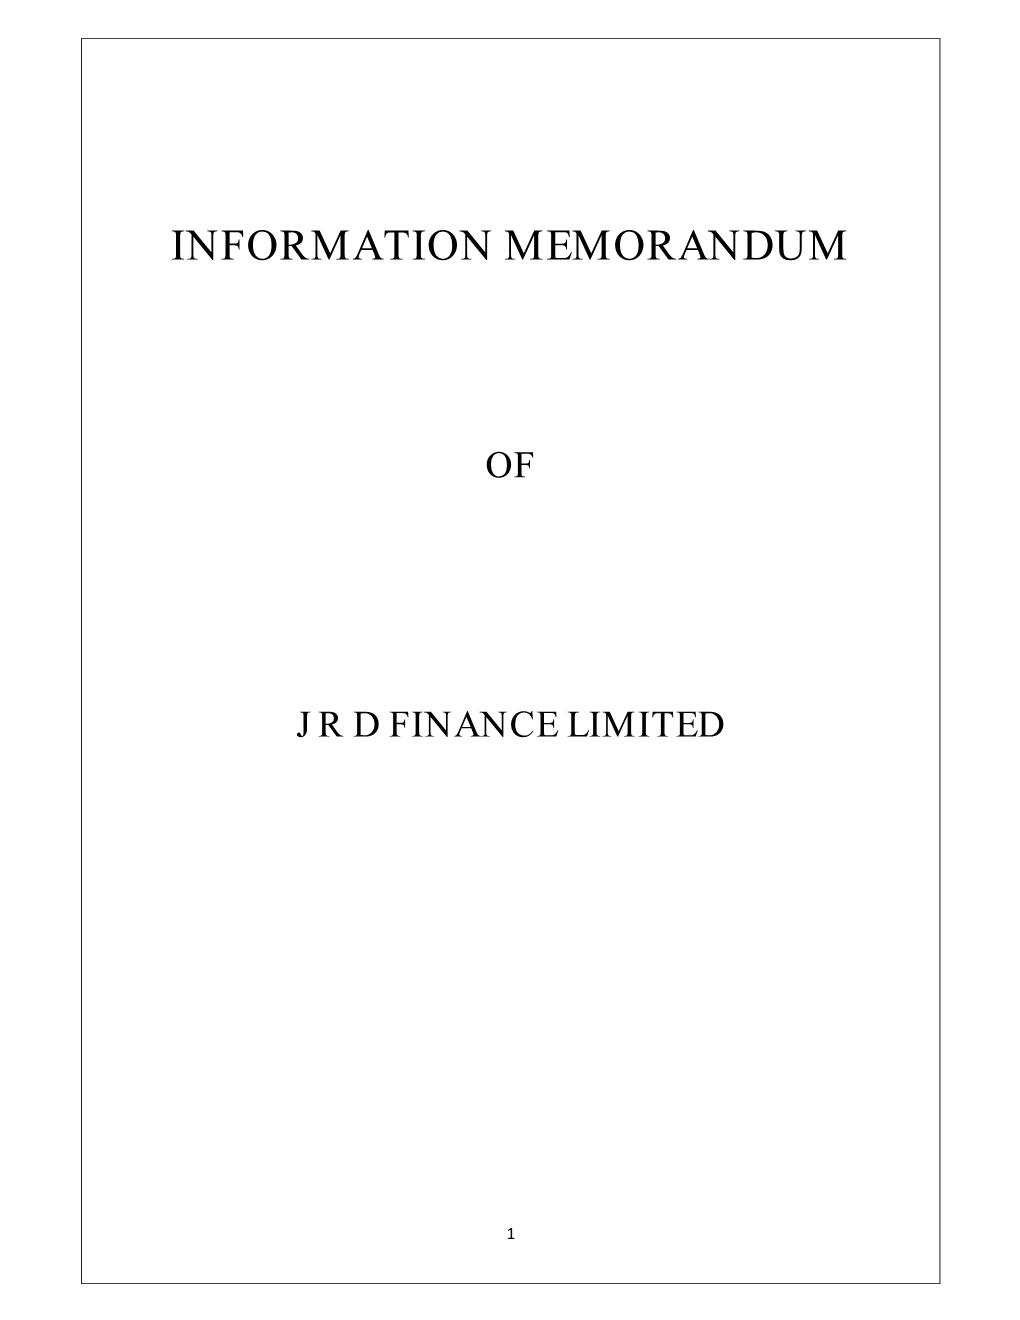 Information Memorandum